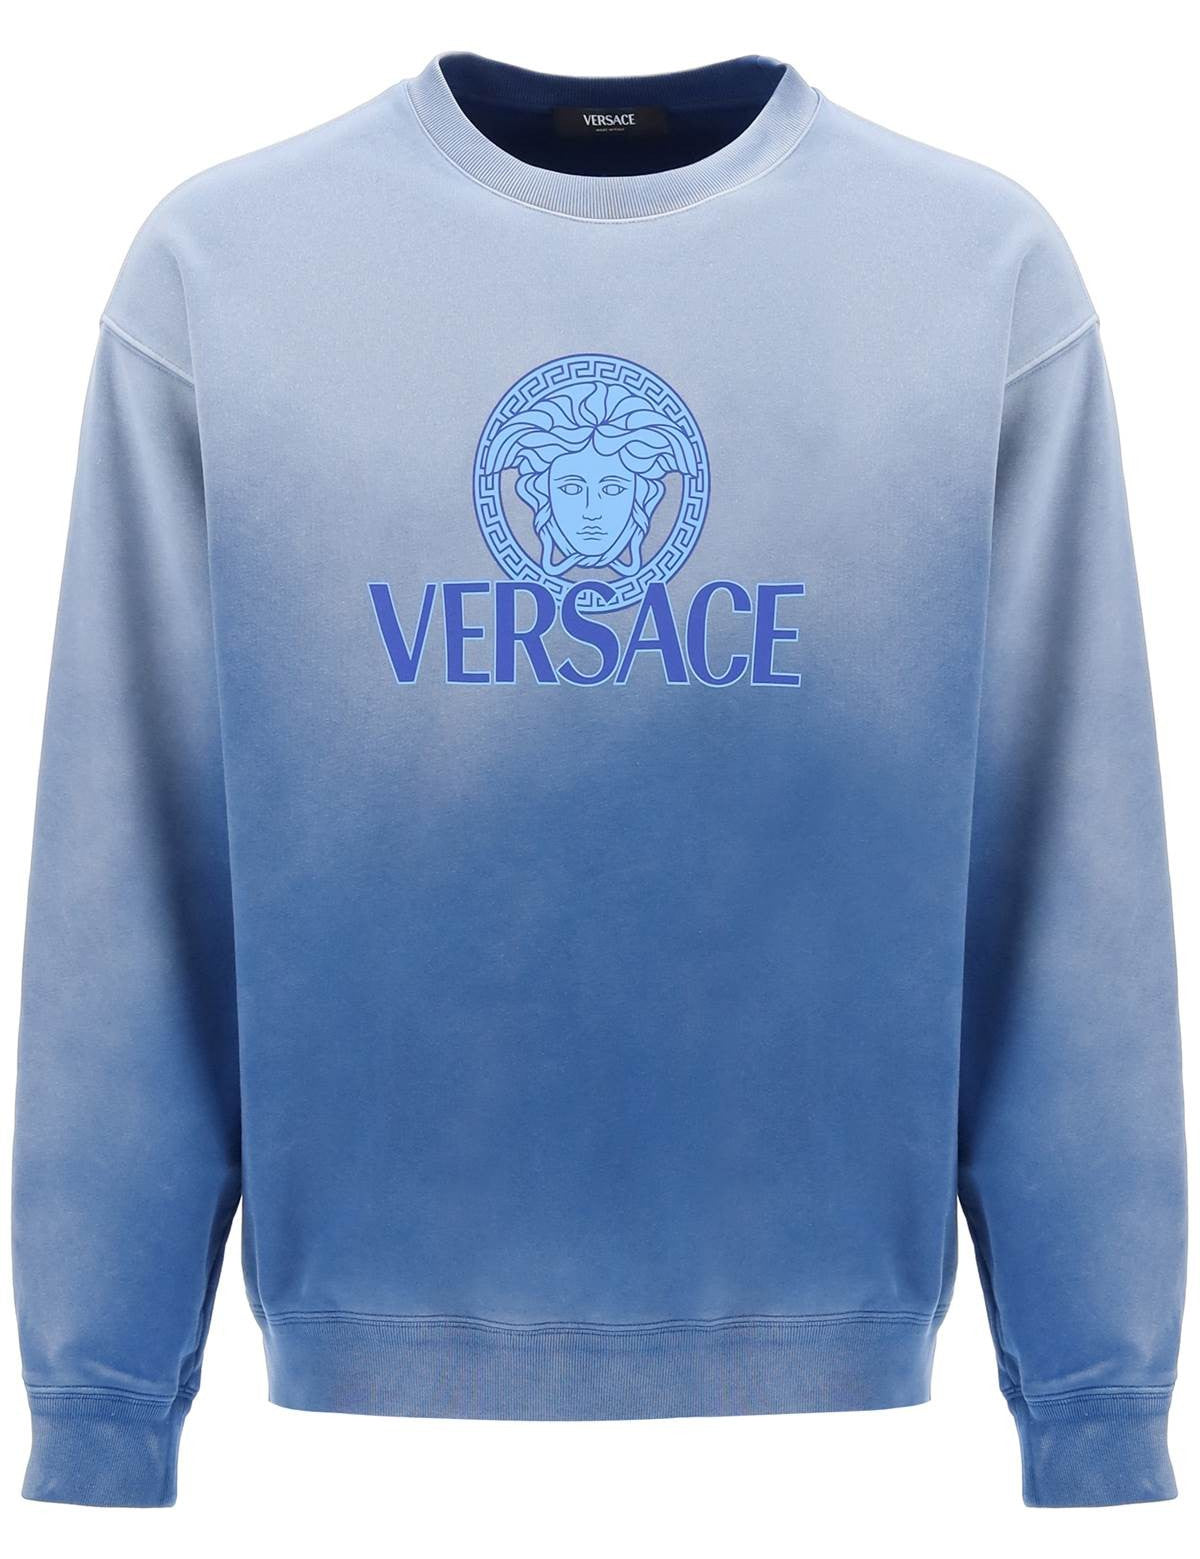 versace-gradient-medusa-sweatshirt.jpg